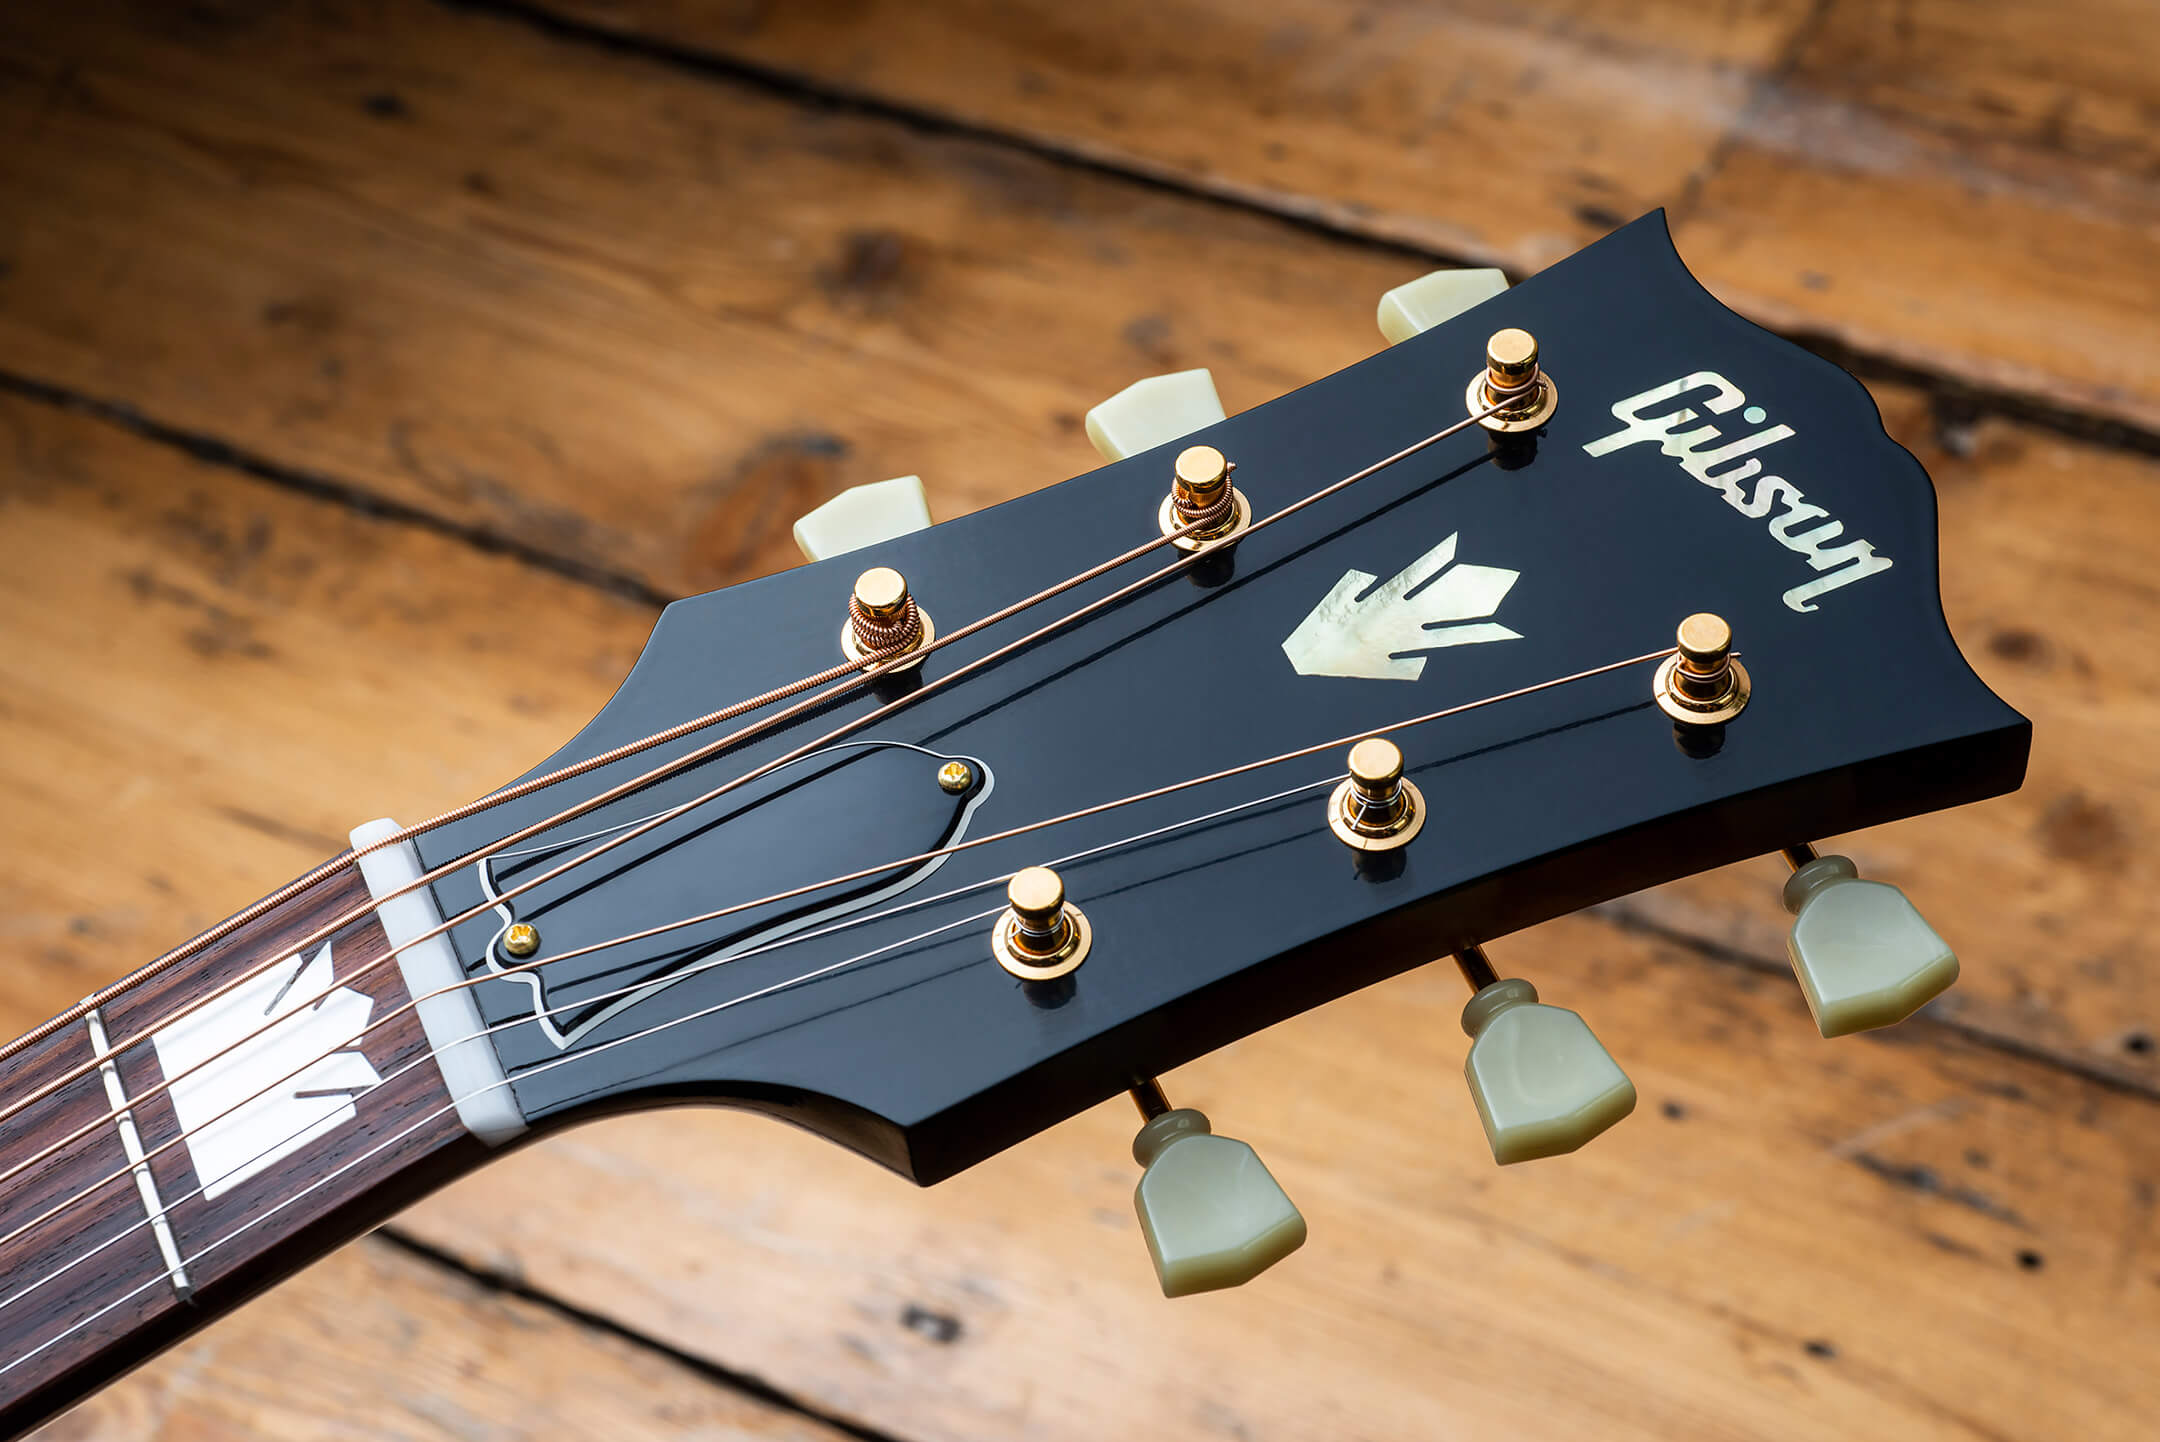 Noel Gallagher's Gibson J-150